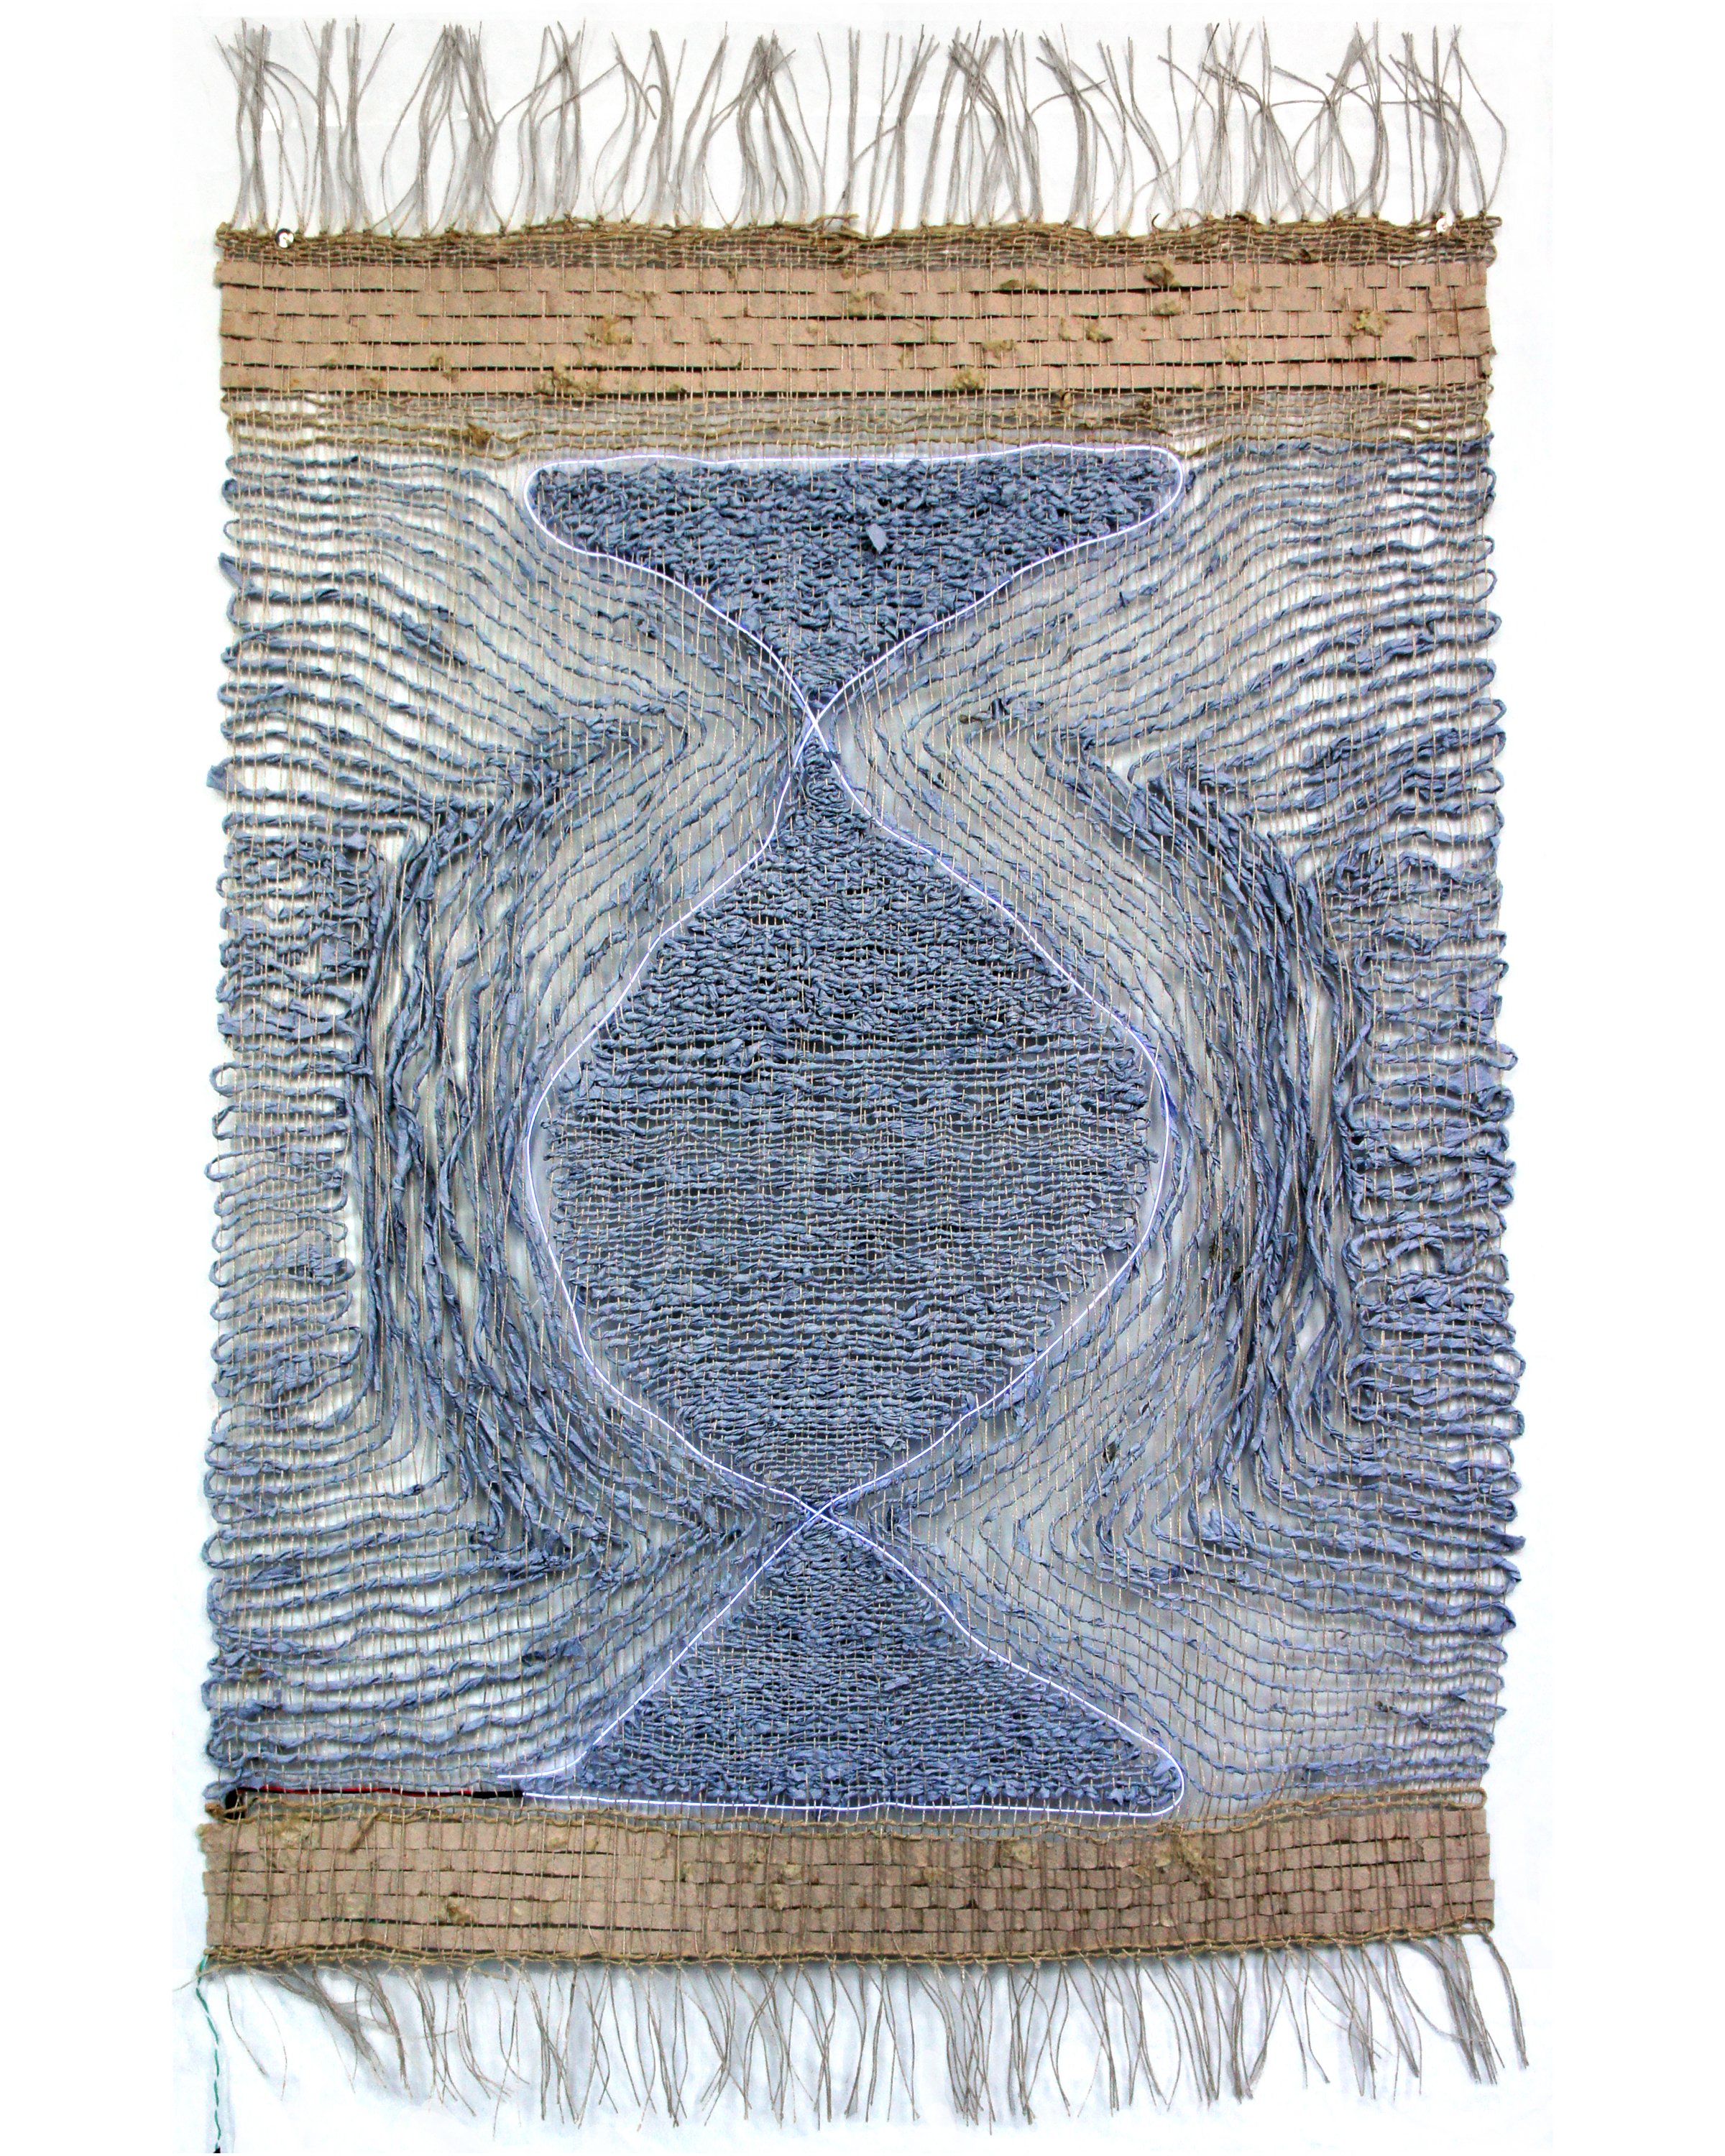   Tusheti Rug 3, pulped quilt, okra handmade paper, el wire, tapestry weaving, 3 x 5 feet, 2022.  